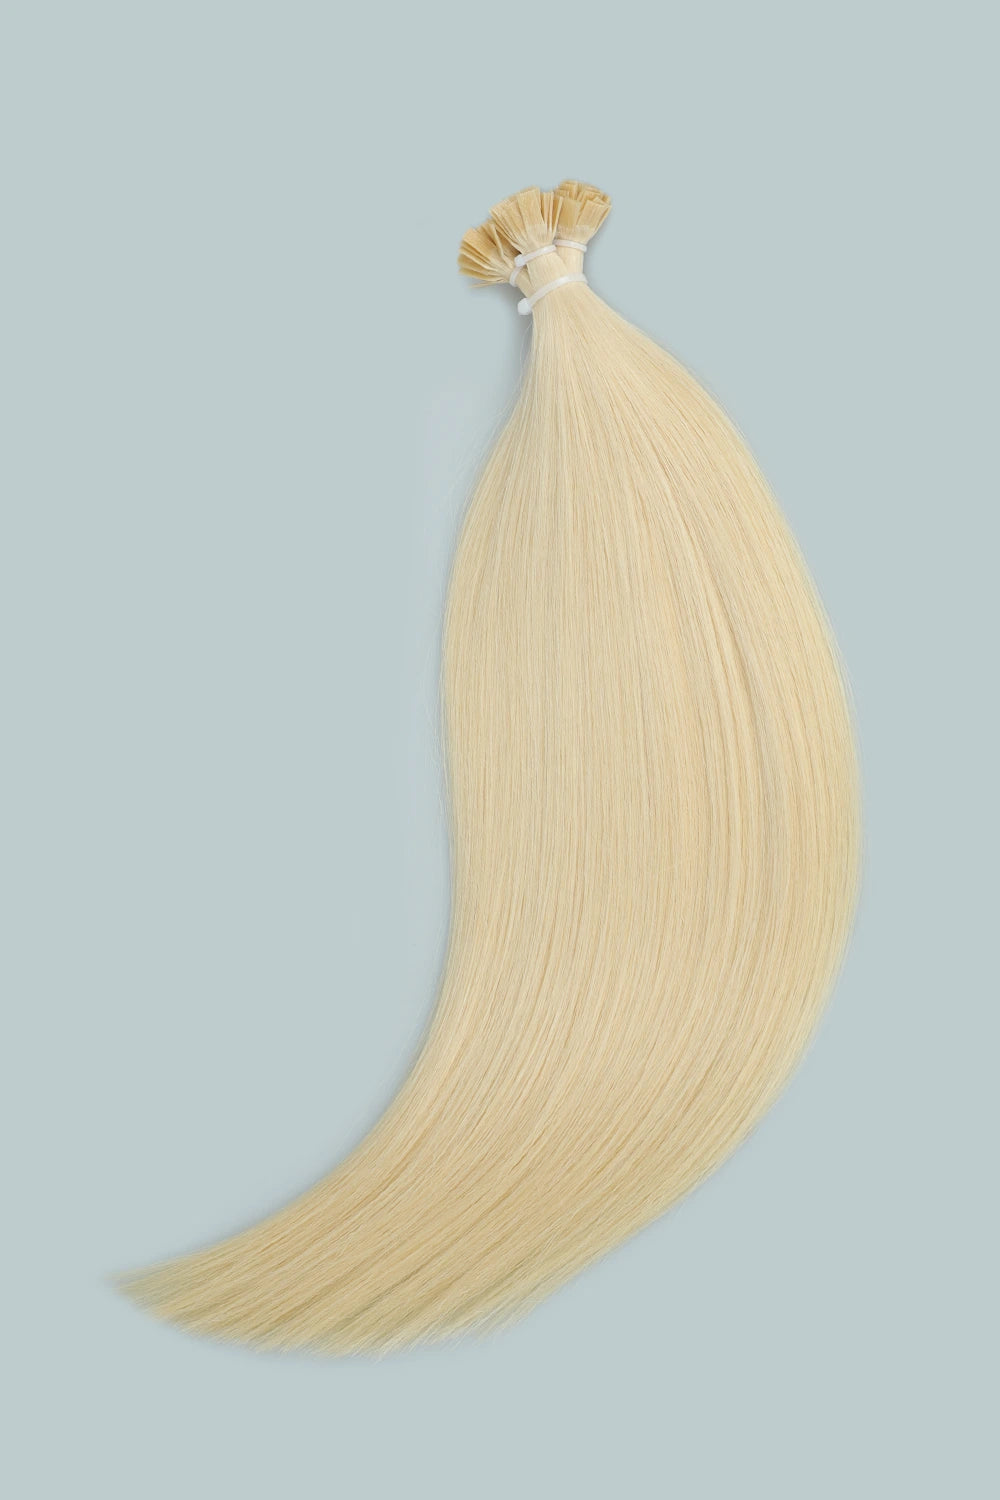 Keratin Bonded Hair Extensions |Flat-Tip | Blonde 613# Hair